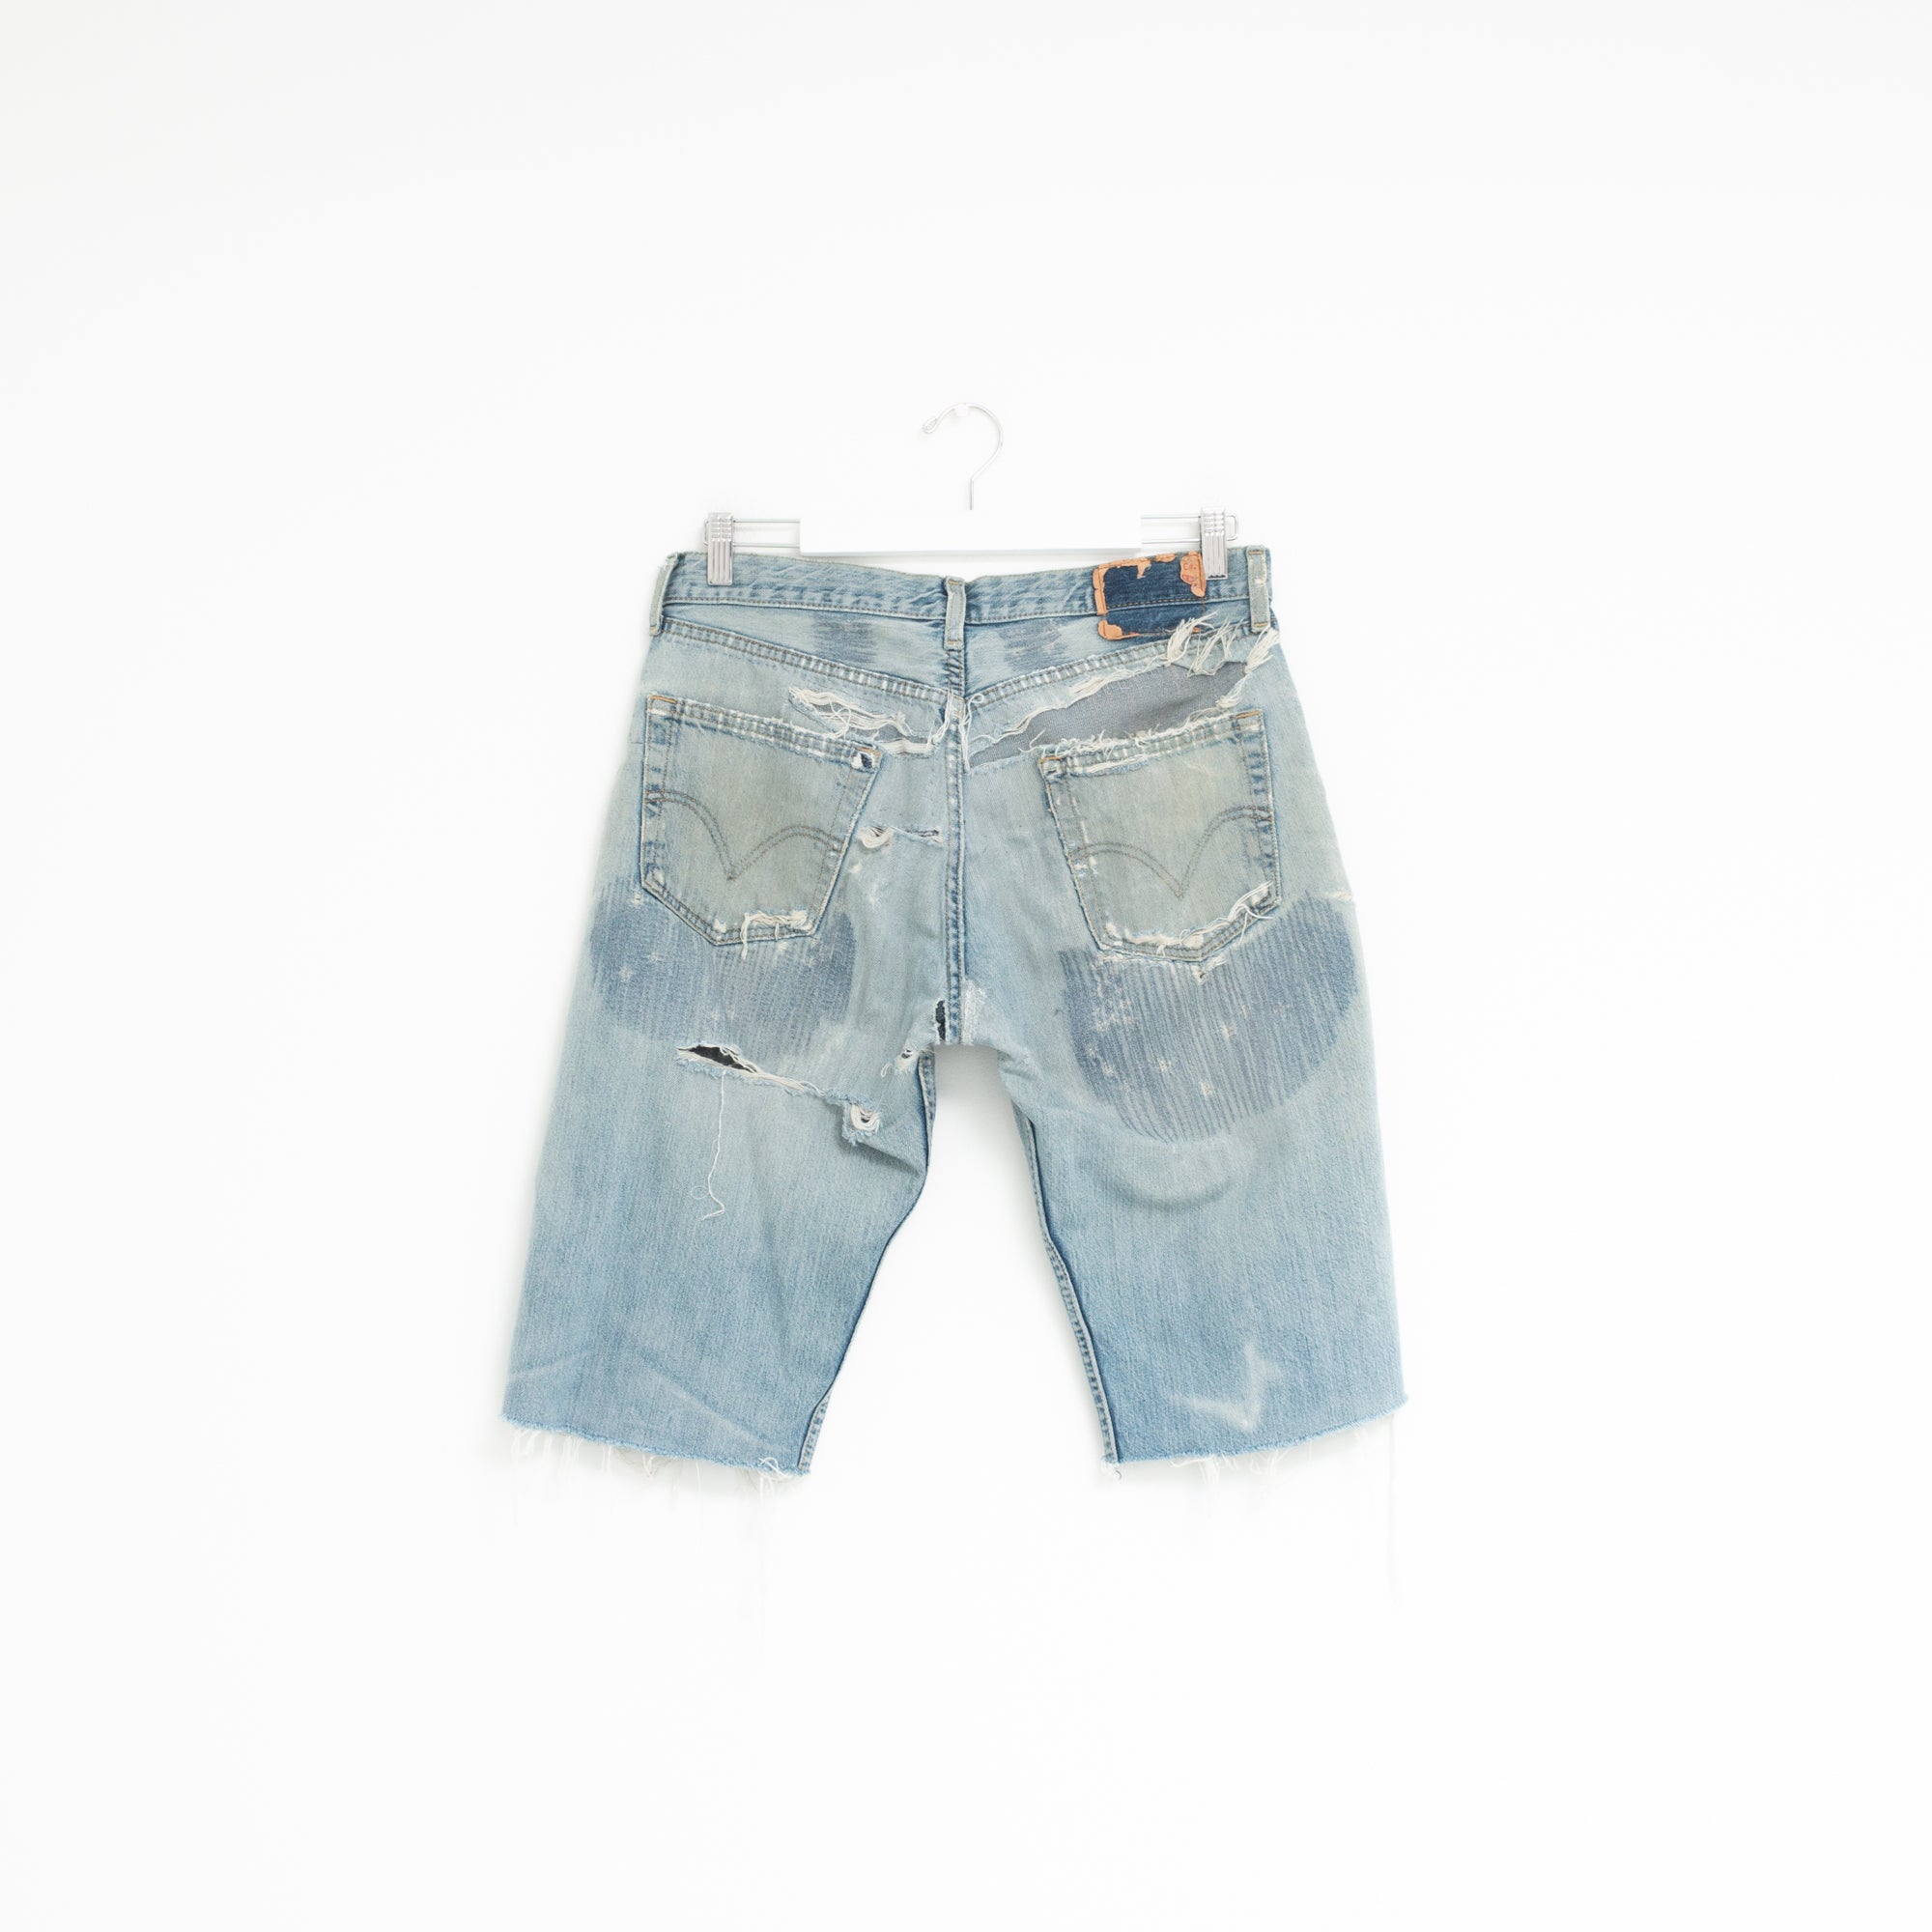 Vintage Shorts W32